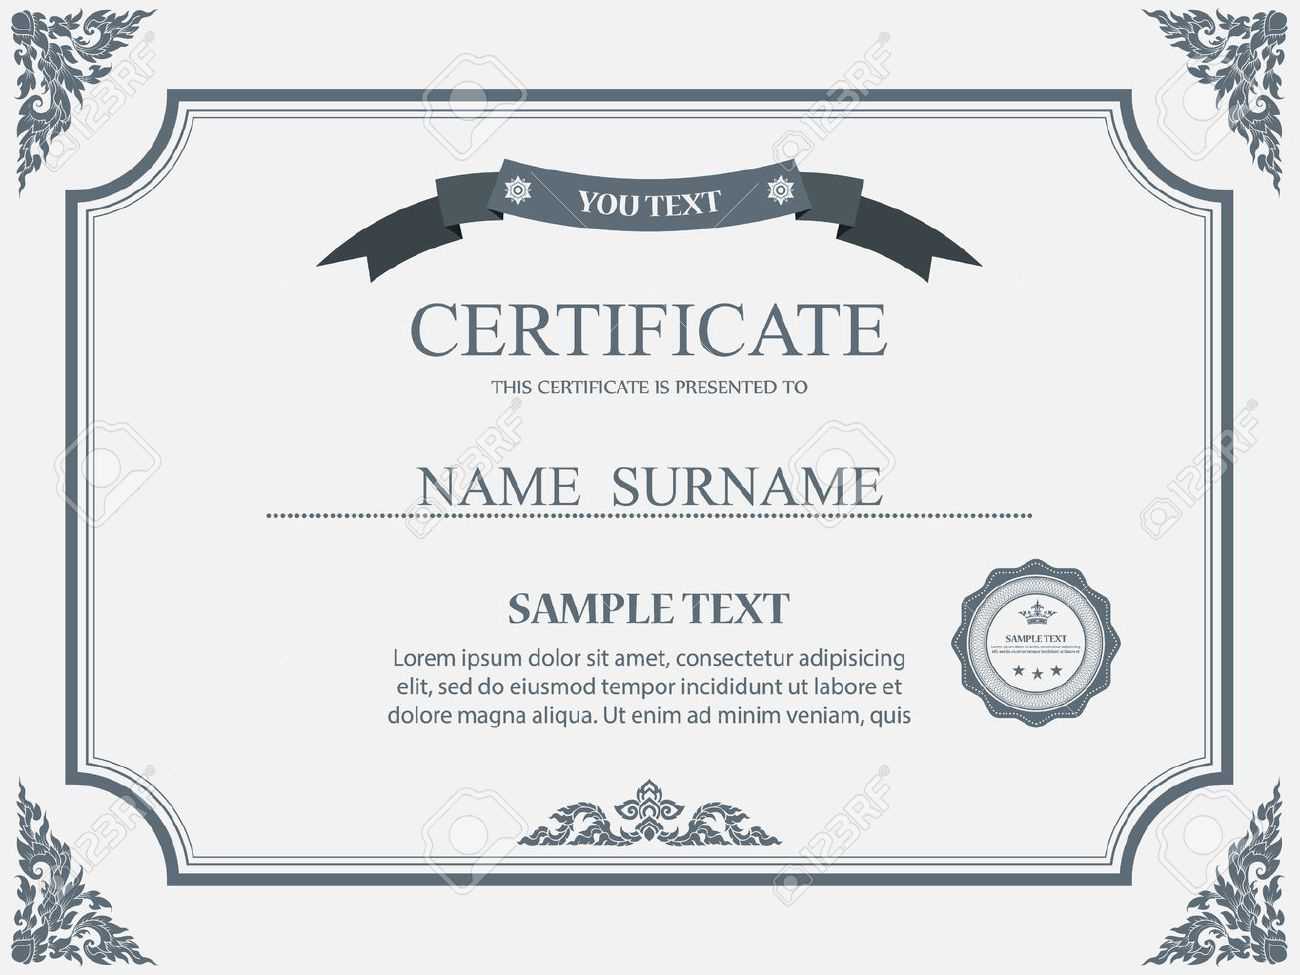 Vector Certificate Template. With Commemorative Certificate Template